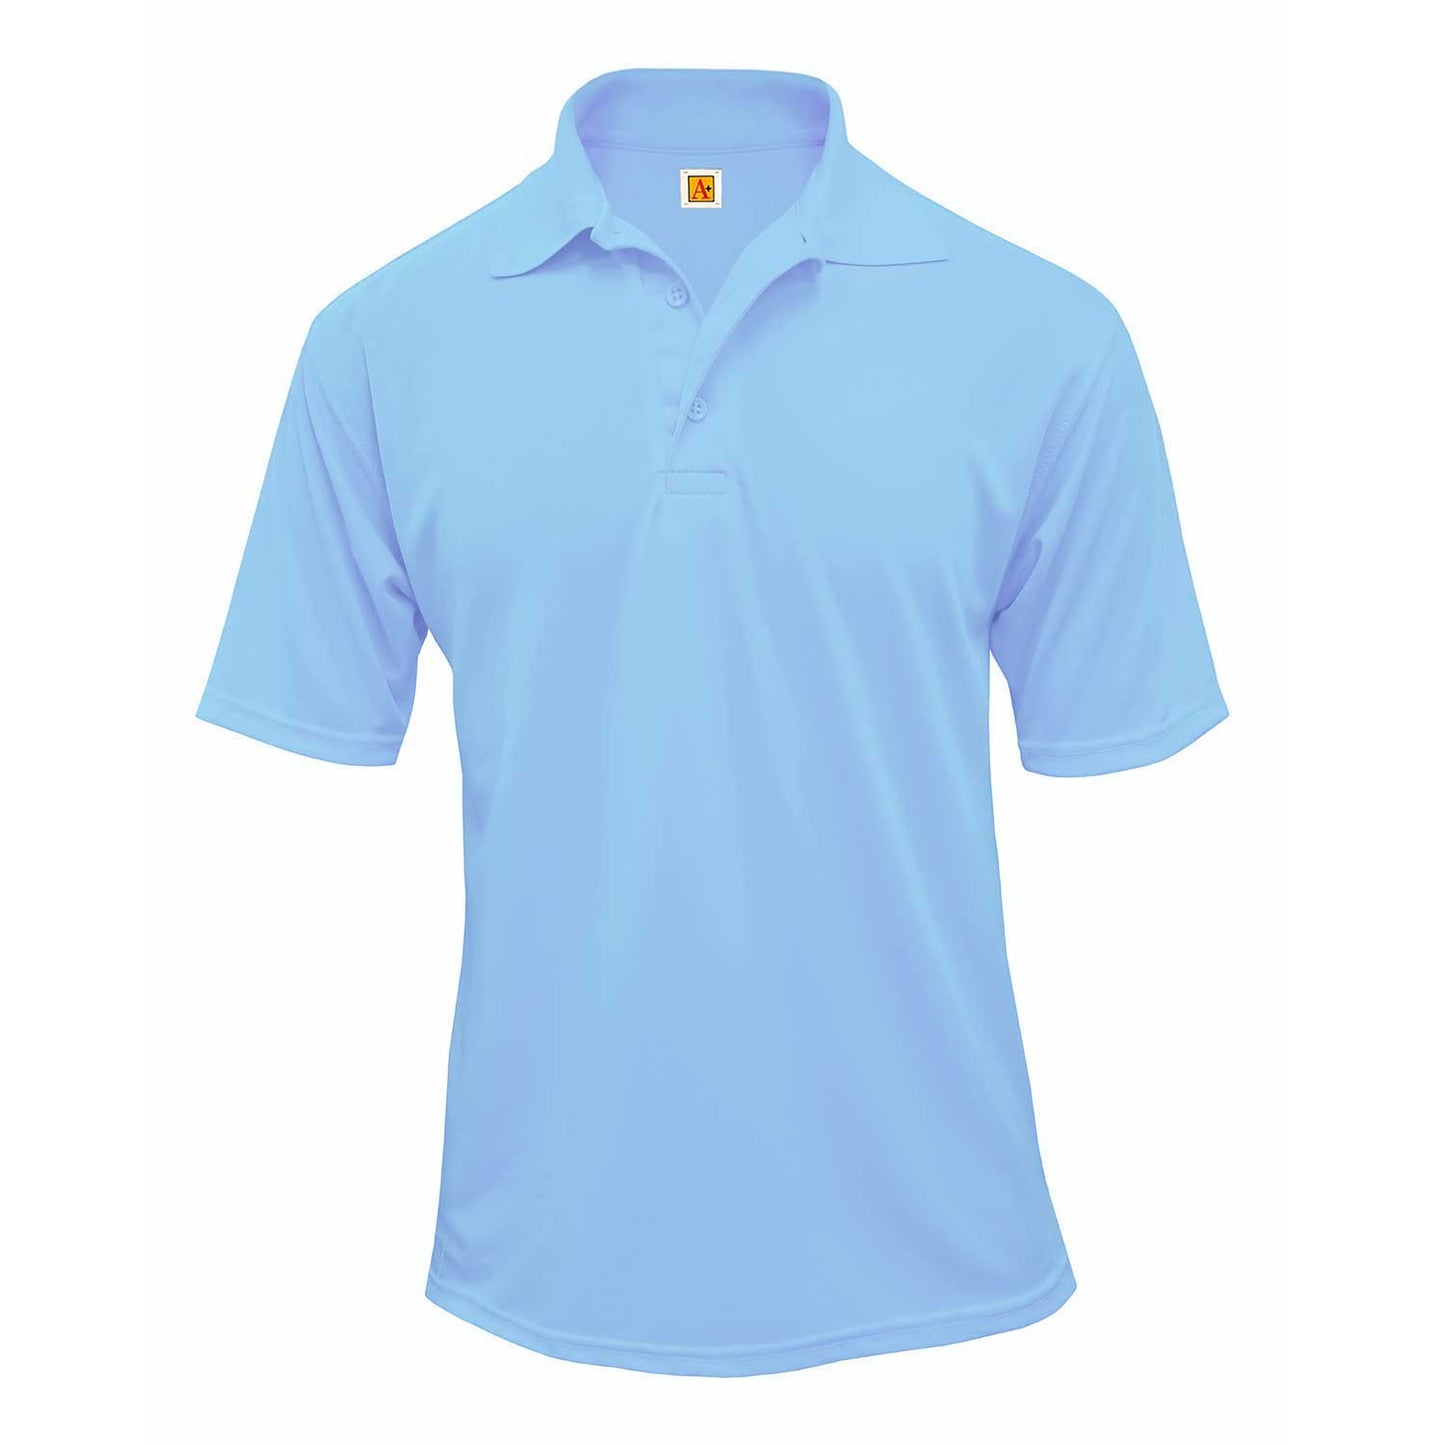 Performance Dri-fit Jersey Knit Short Sleeve Shirt (Unisex) - 1227